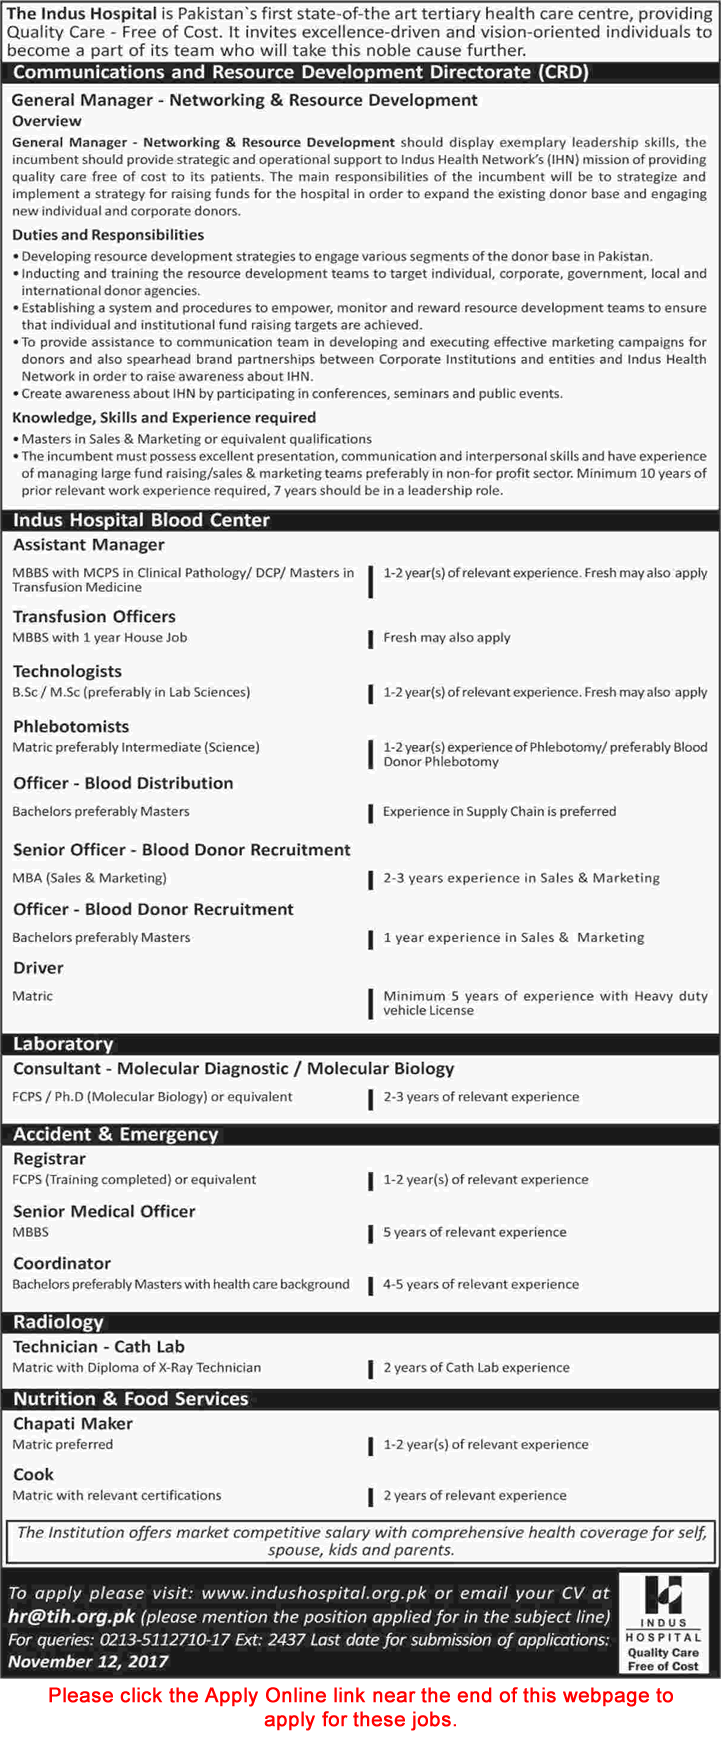 Indus Hospital Karachi Jobs October 2017 November Apply Online Medical Officers & Others Latest